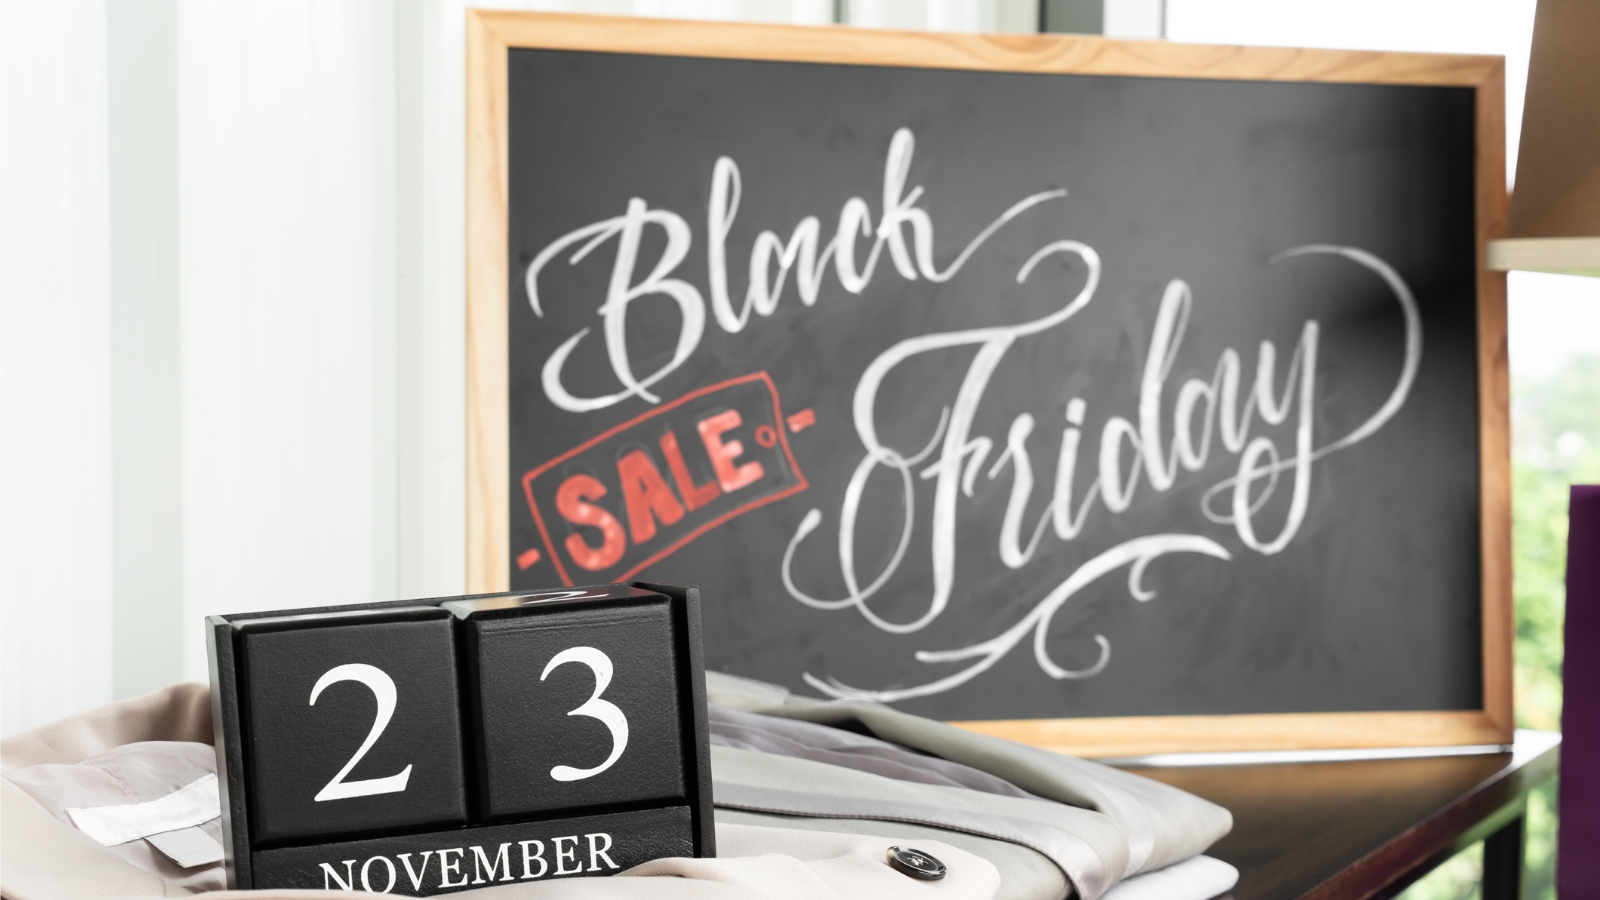 5 Black Friday Deals For IT Professionals